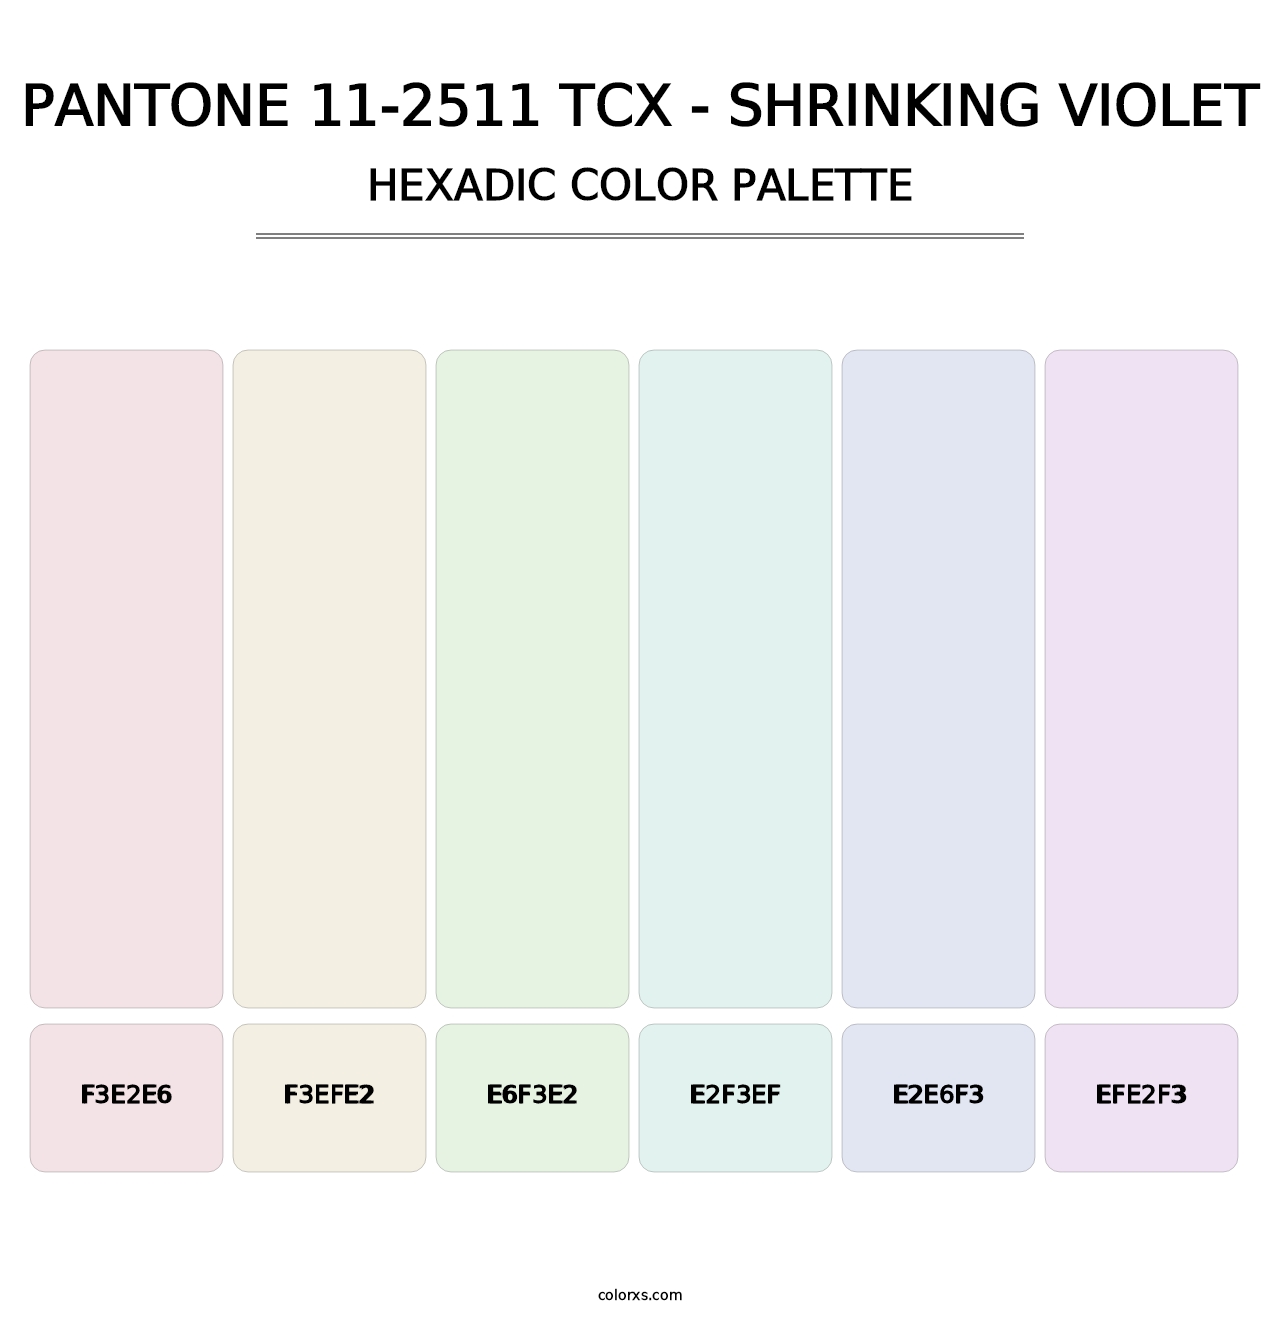 PANTONE 11-2511 TCX - Shrinking Violet - Hexadic Color Palette